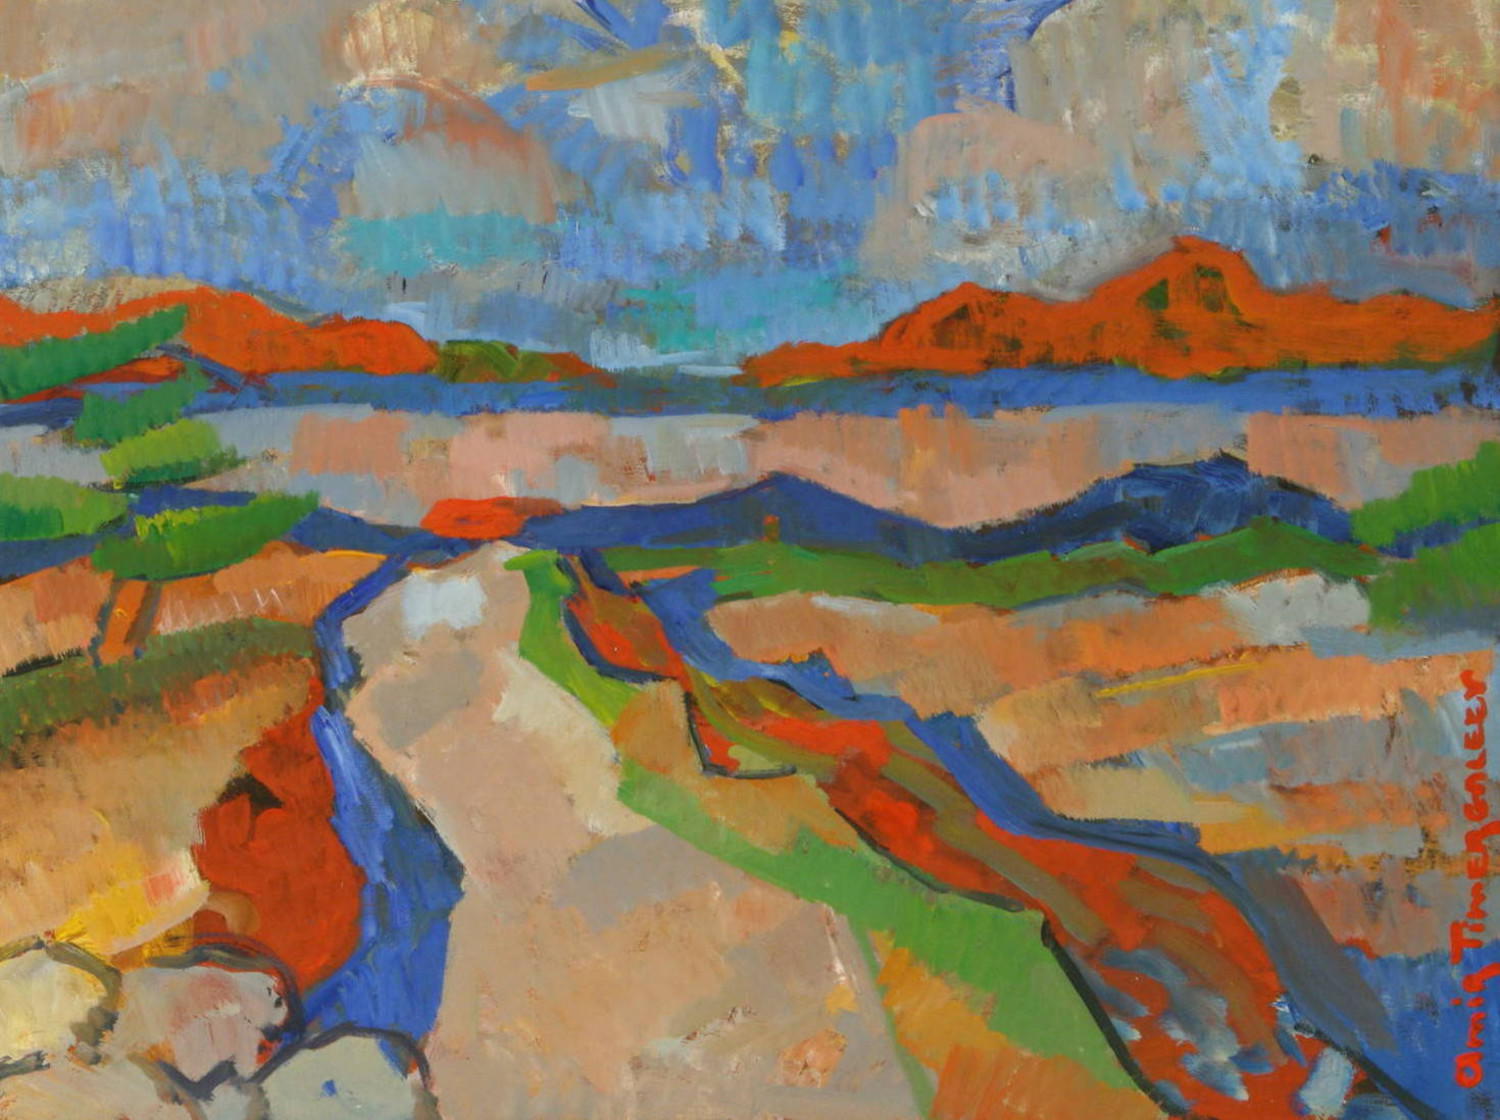 Landscape (Разное). Амир Тимергалеев. 2006, холст, масло, 80x60